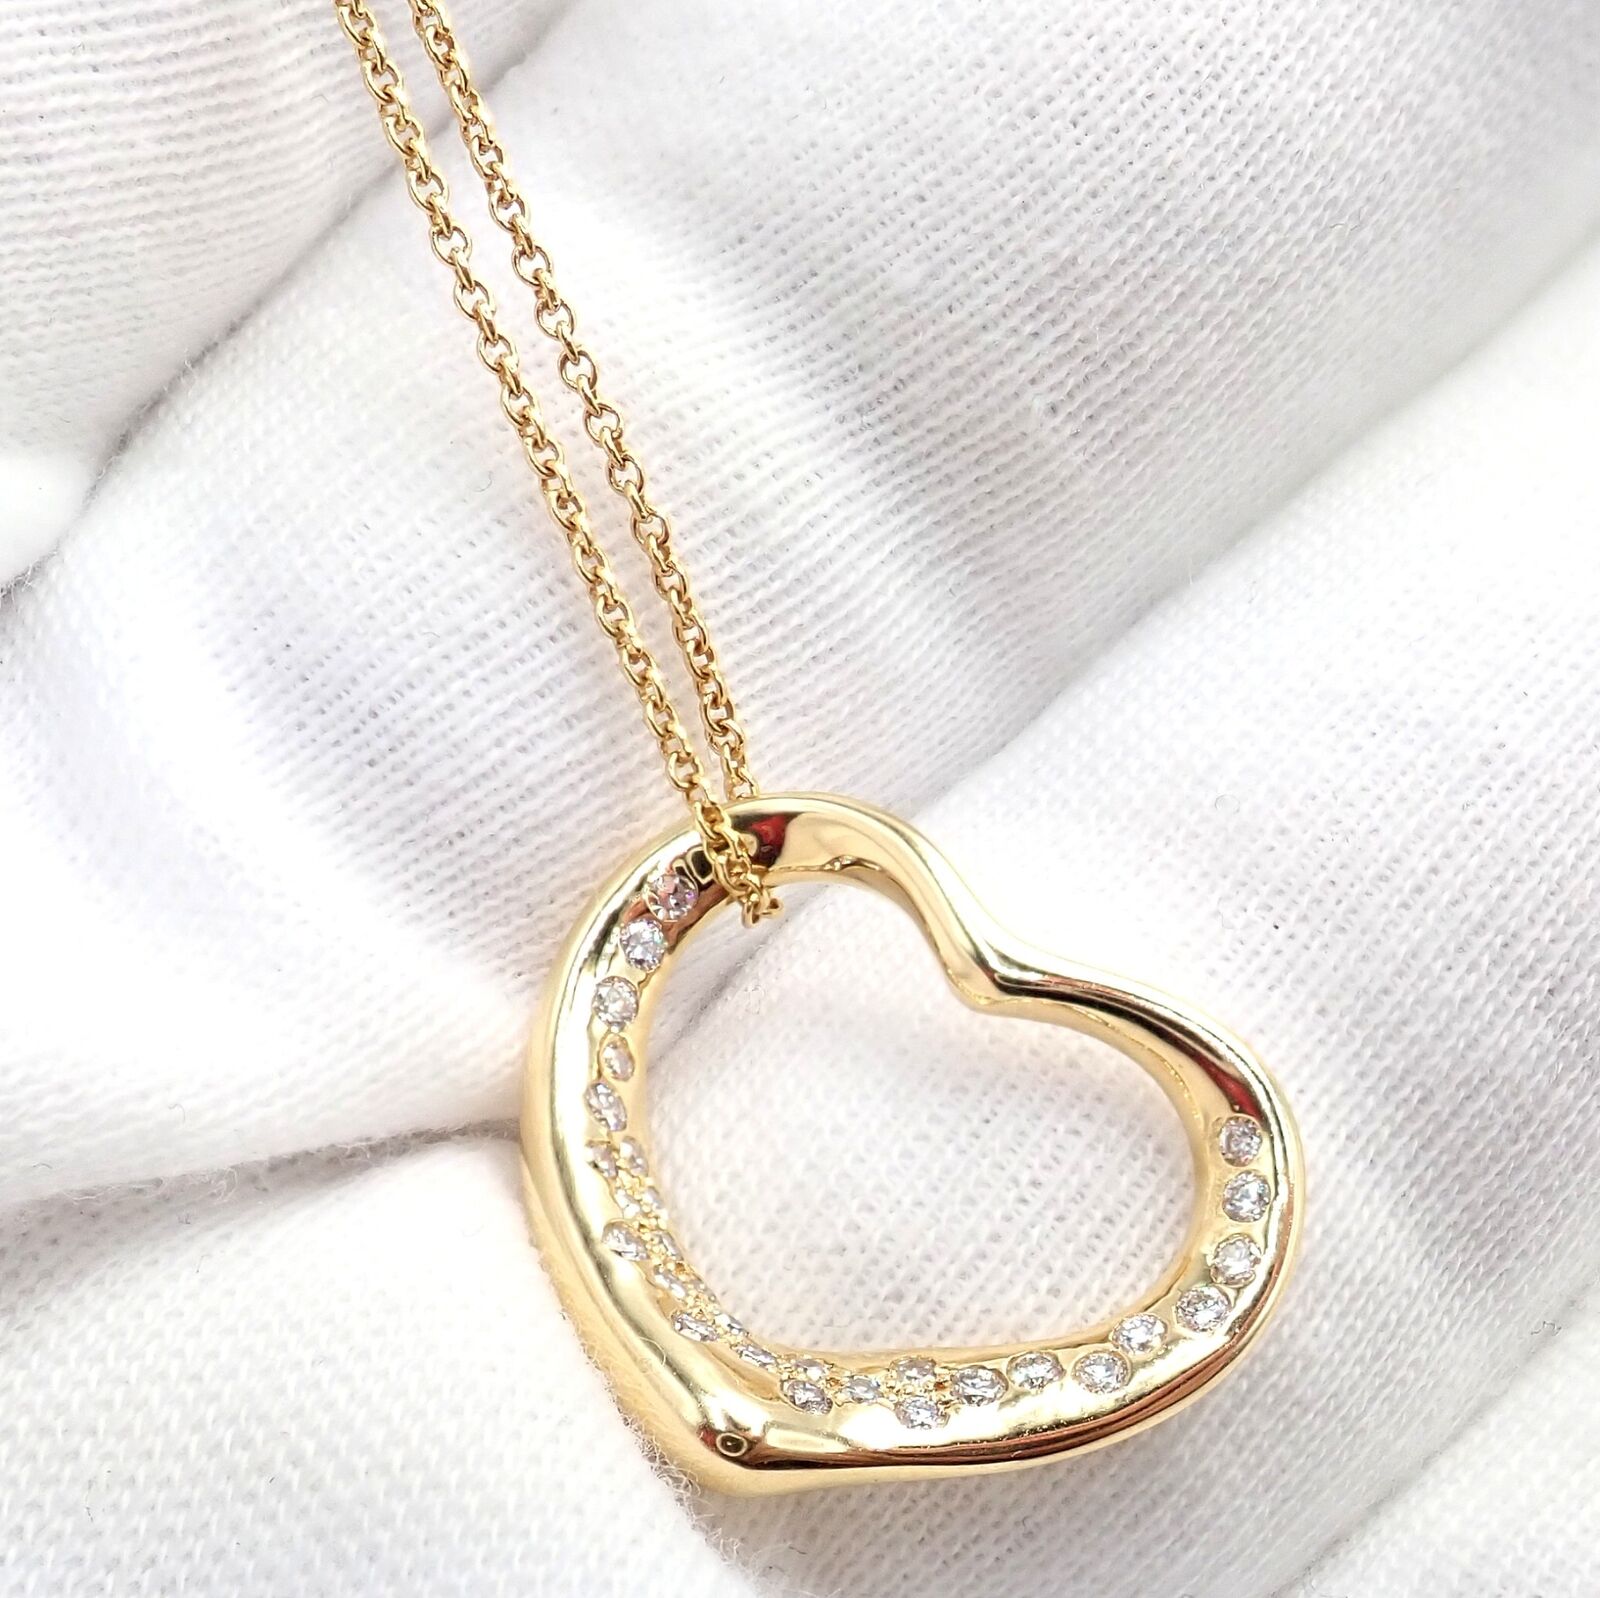 Tiffany & Co. Puffed Heart Necklace 18K Yellow Gold | eBay